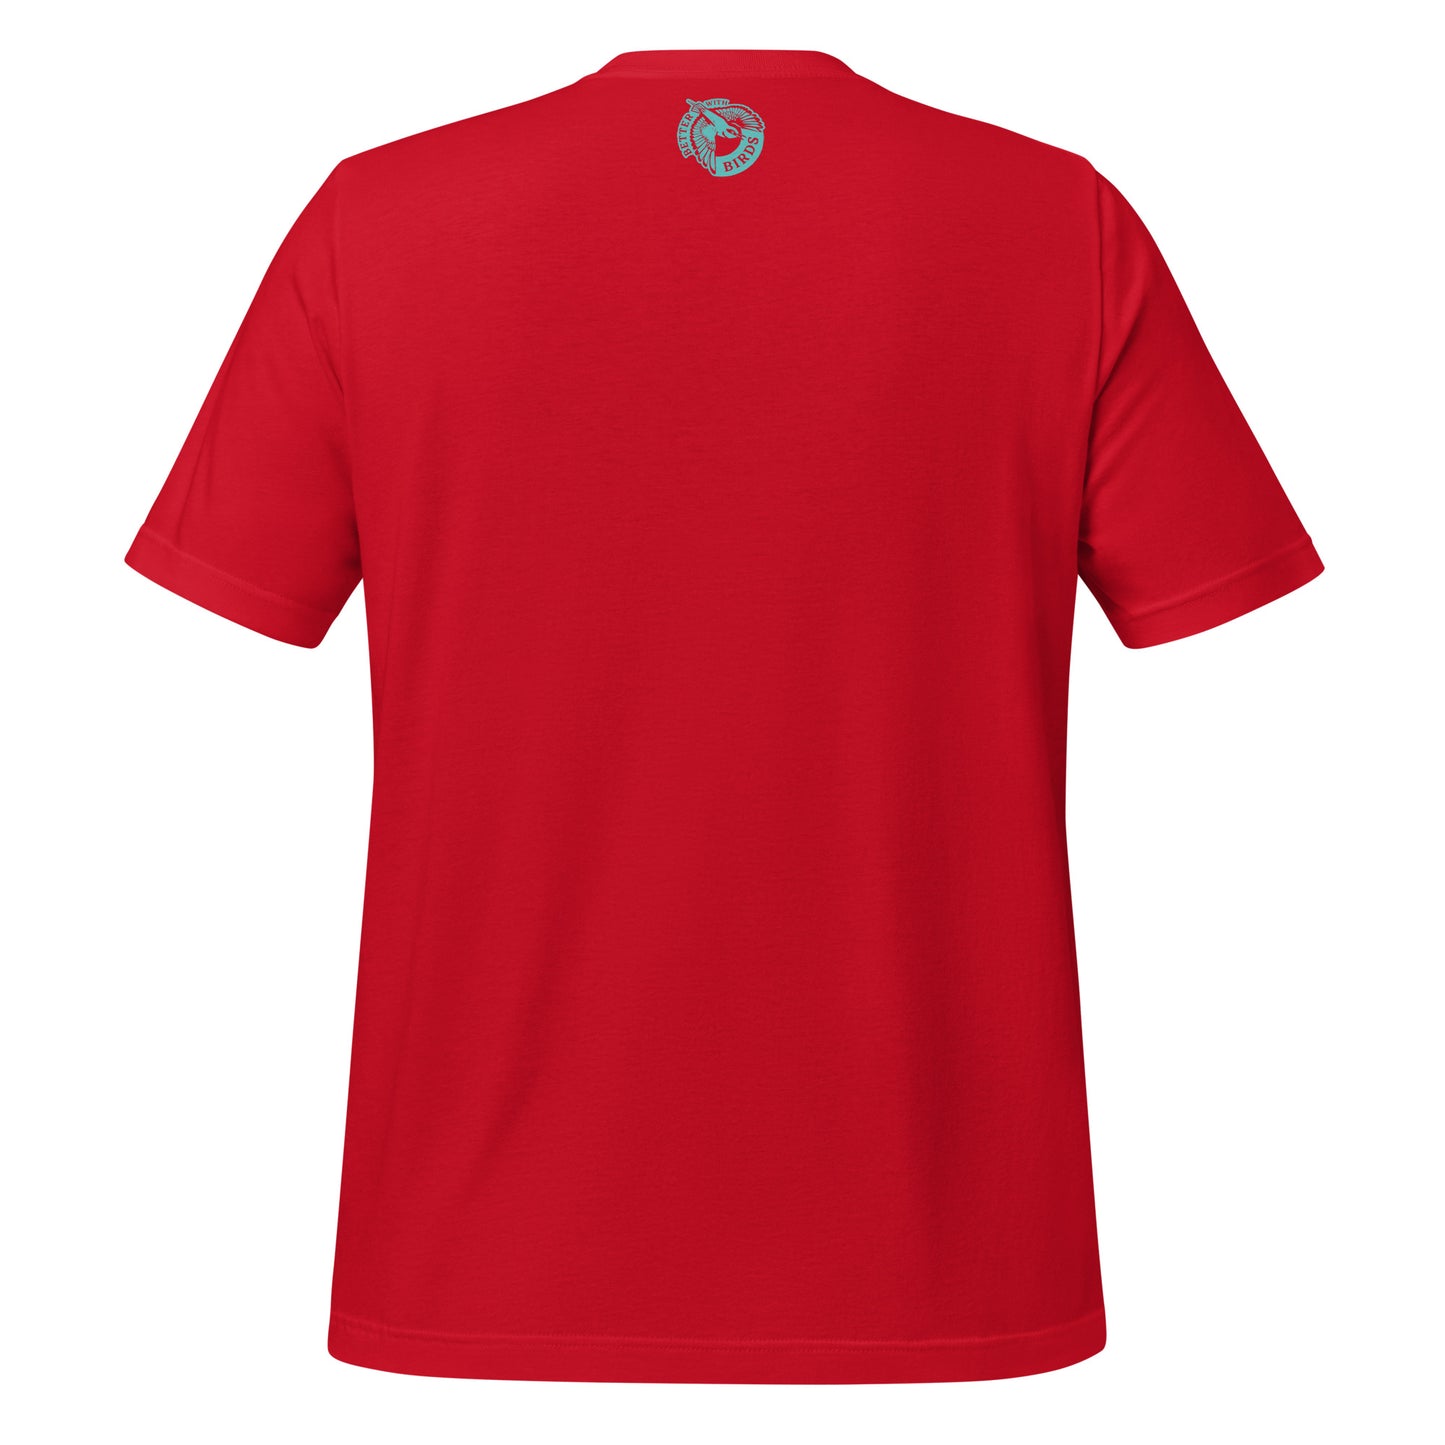 Osprey Lightweight Cotton Unisex T-Shirt